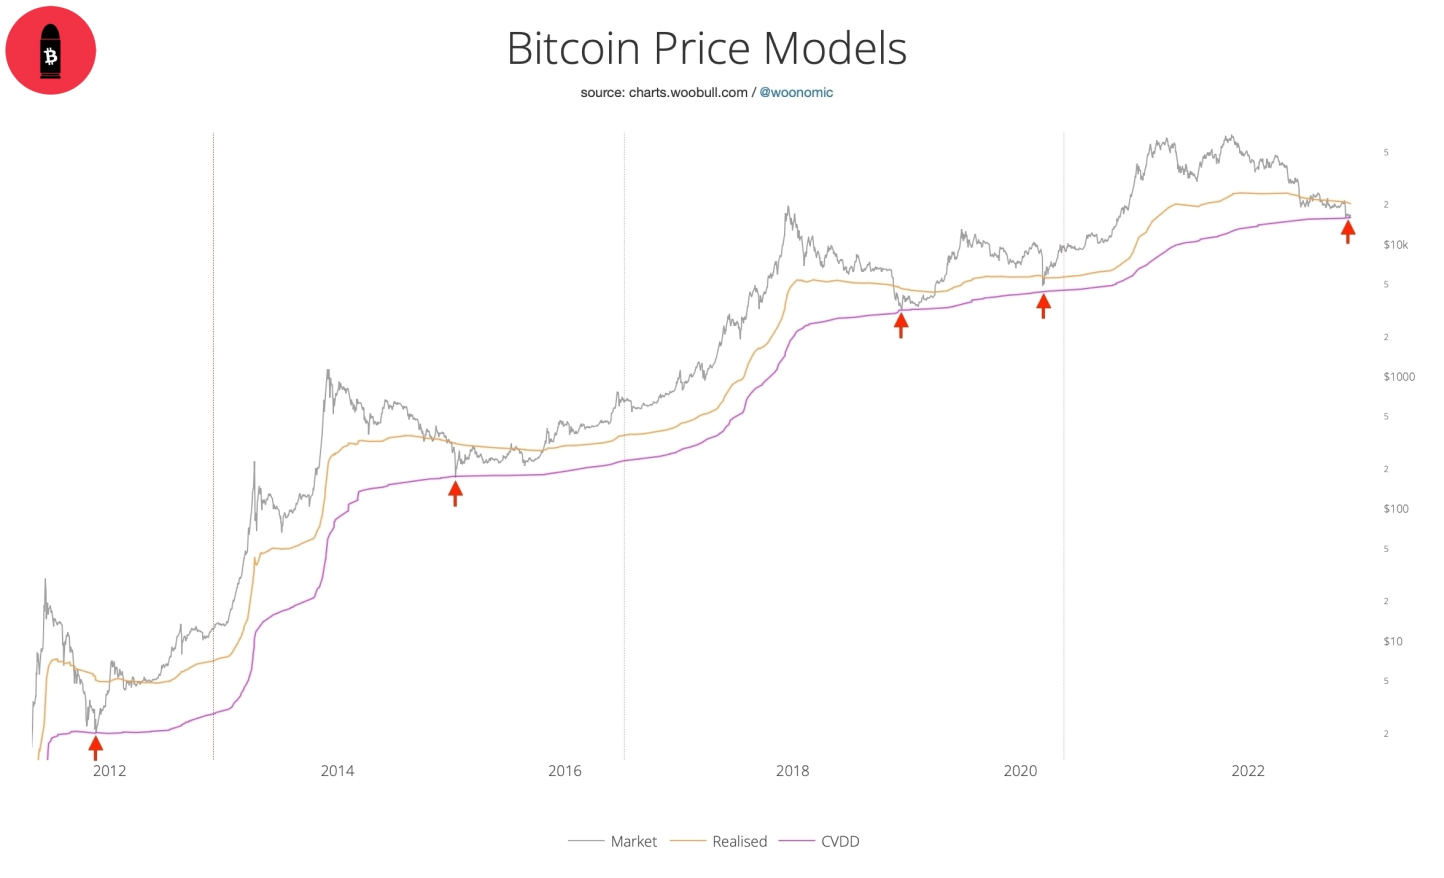 cvdd bitcoin price models